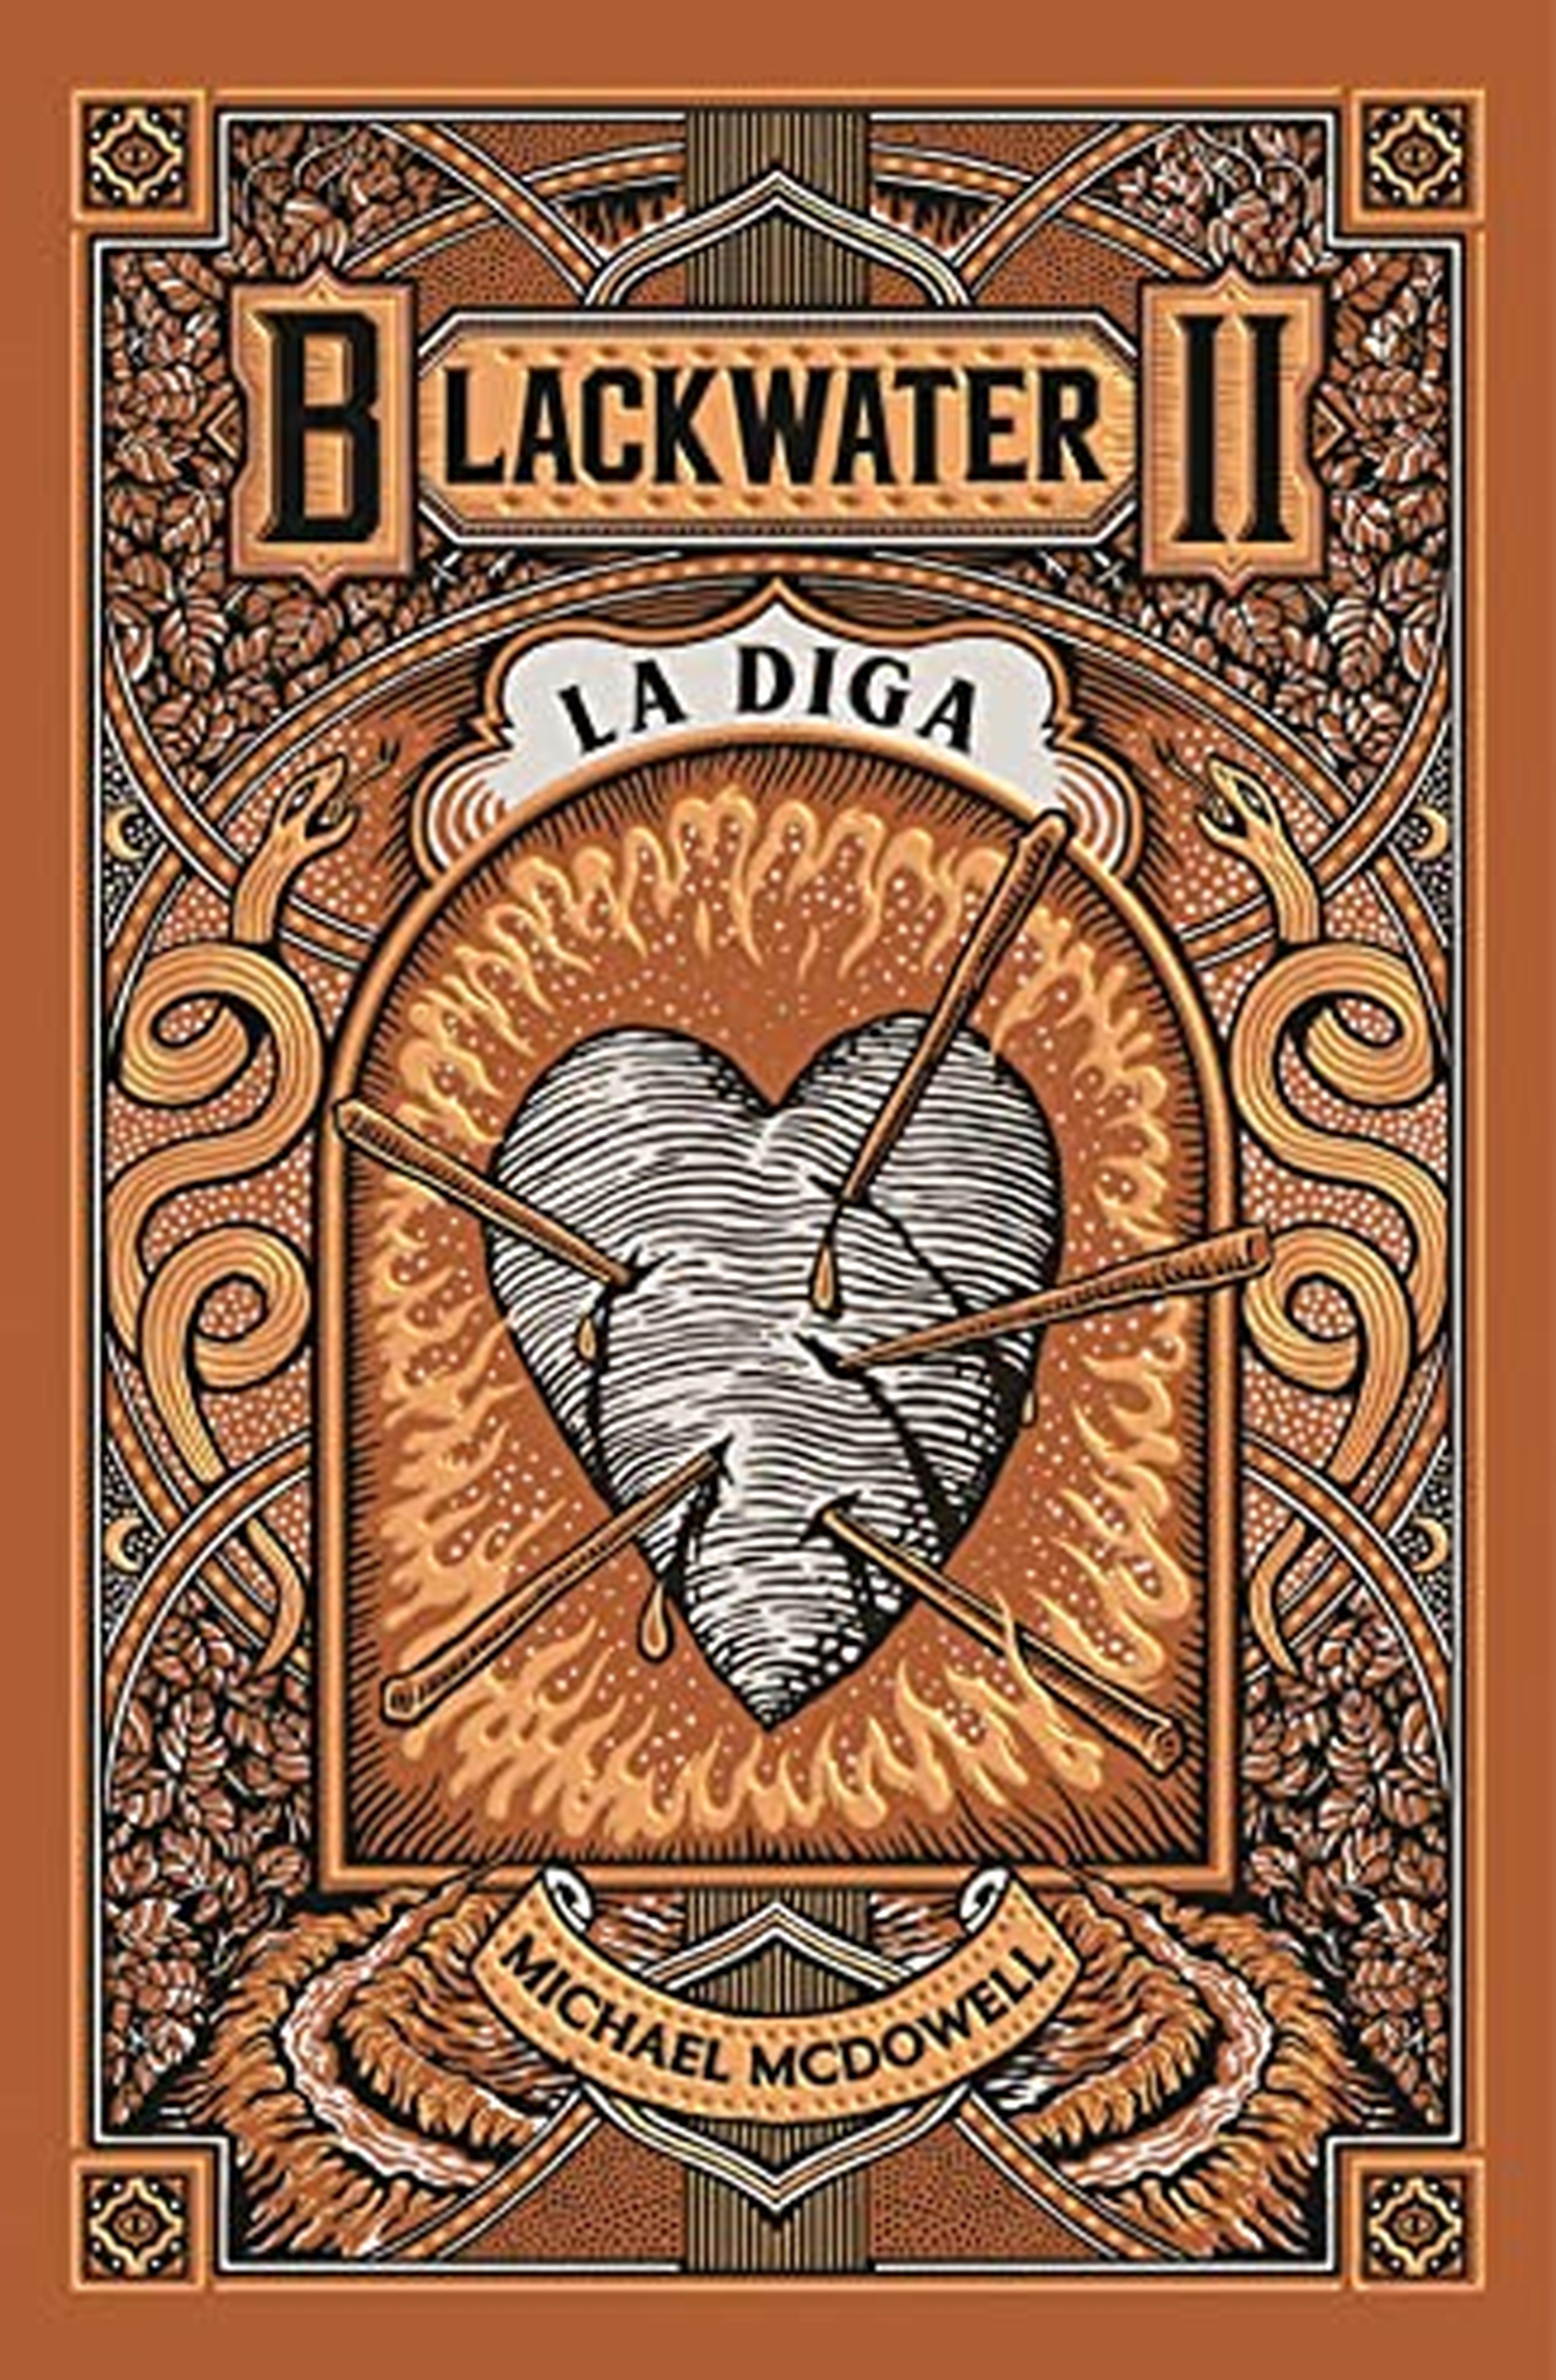 LA DIGA Blackwater II